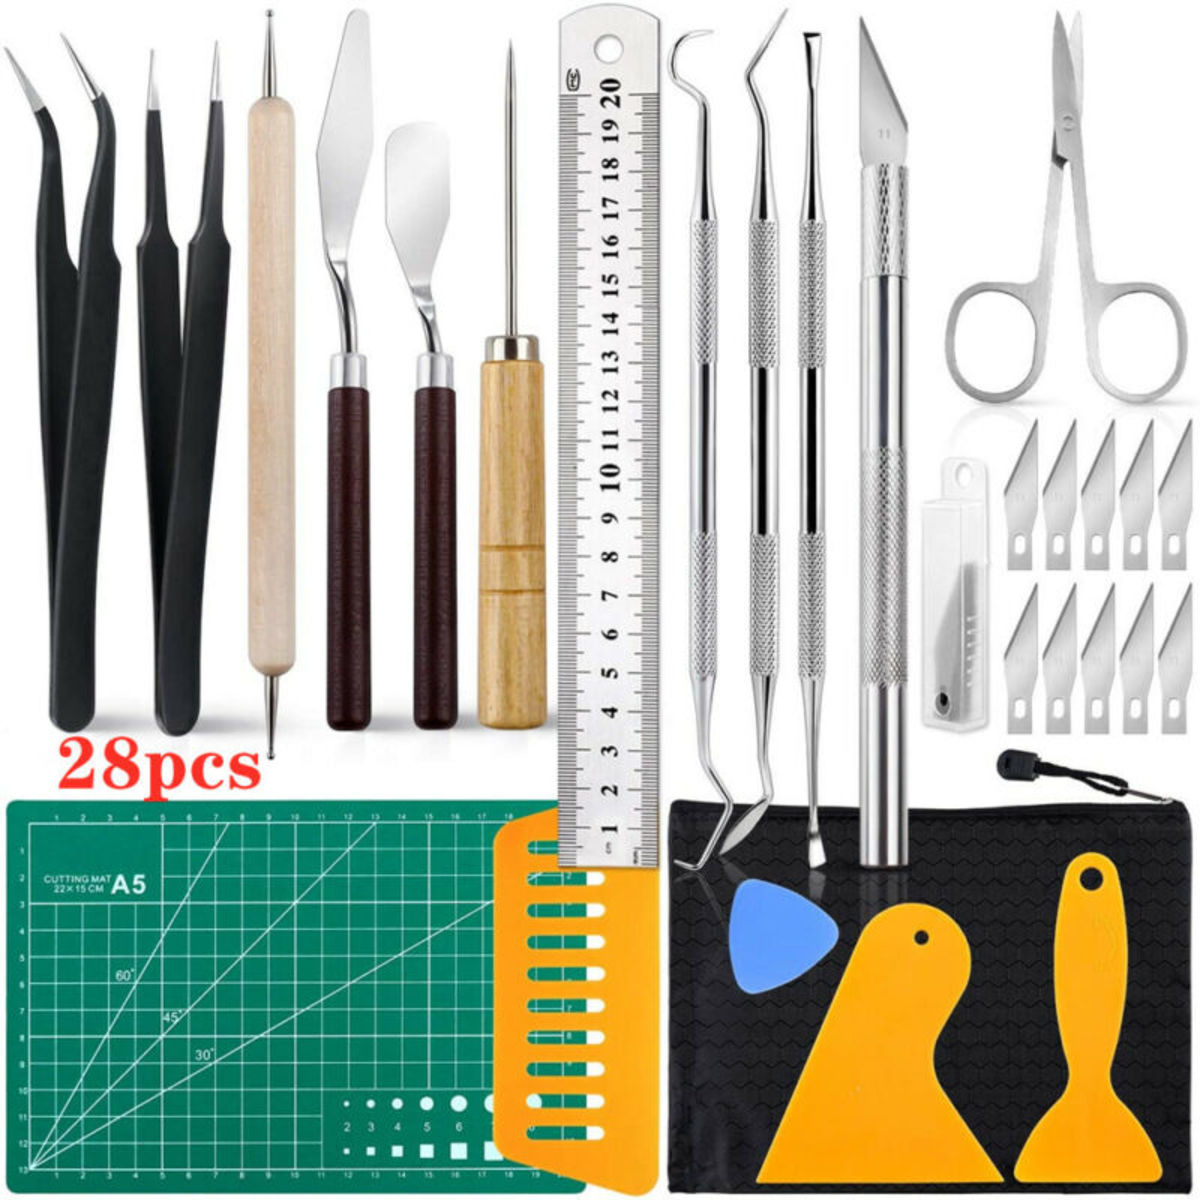 Precision Quilting Tools Non Stick Teflon Sheets - 3 Pack, Various